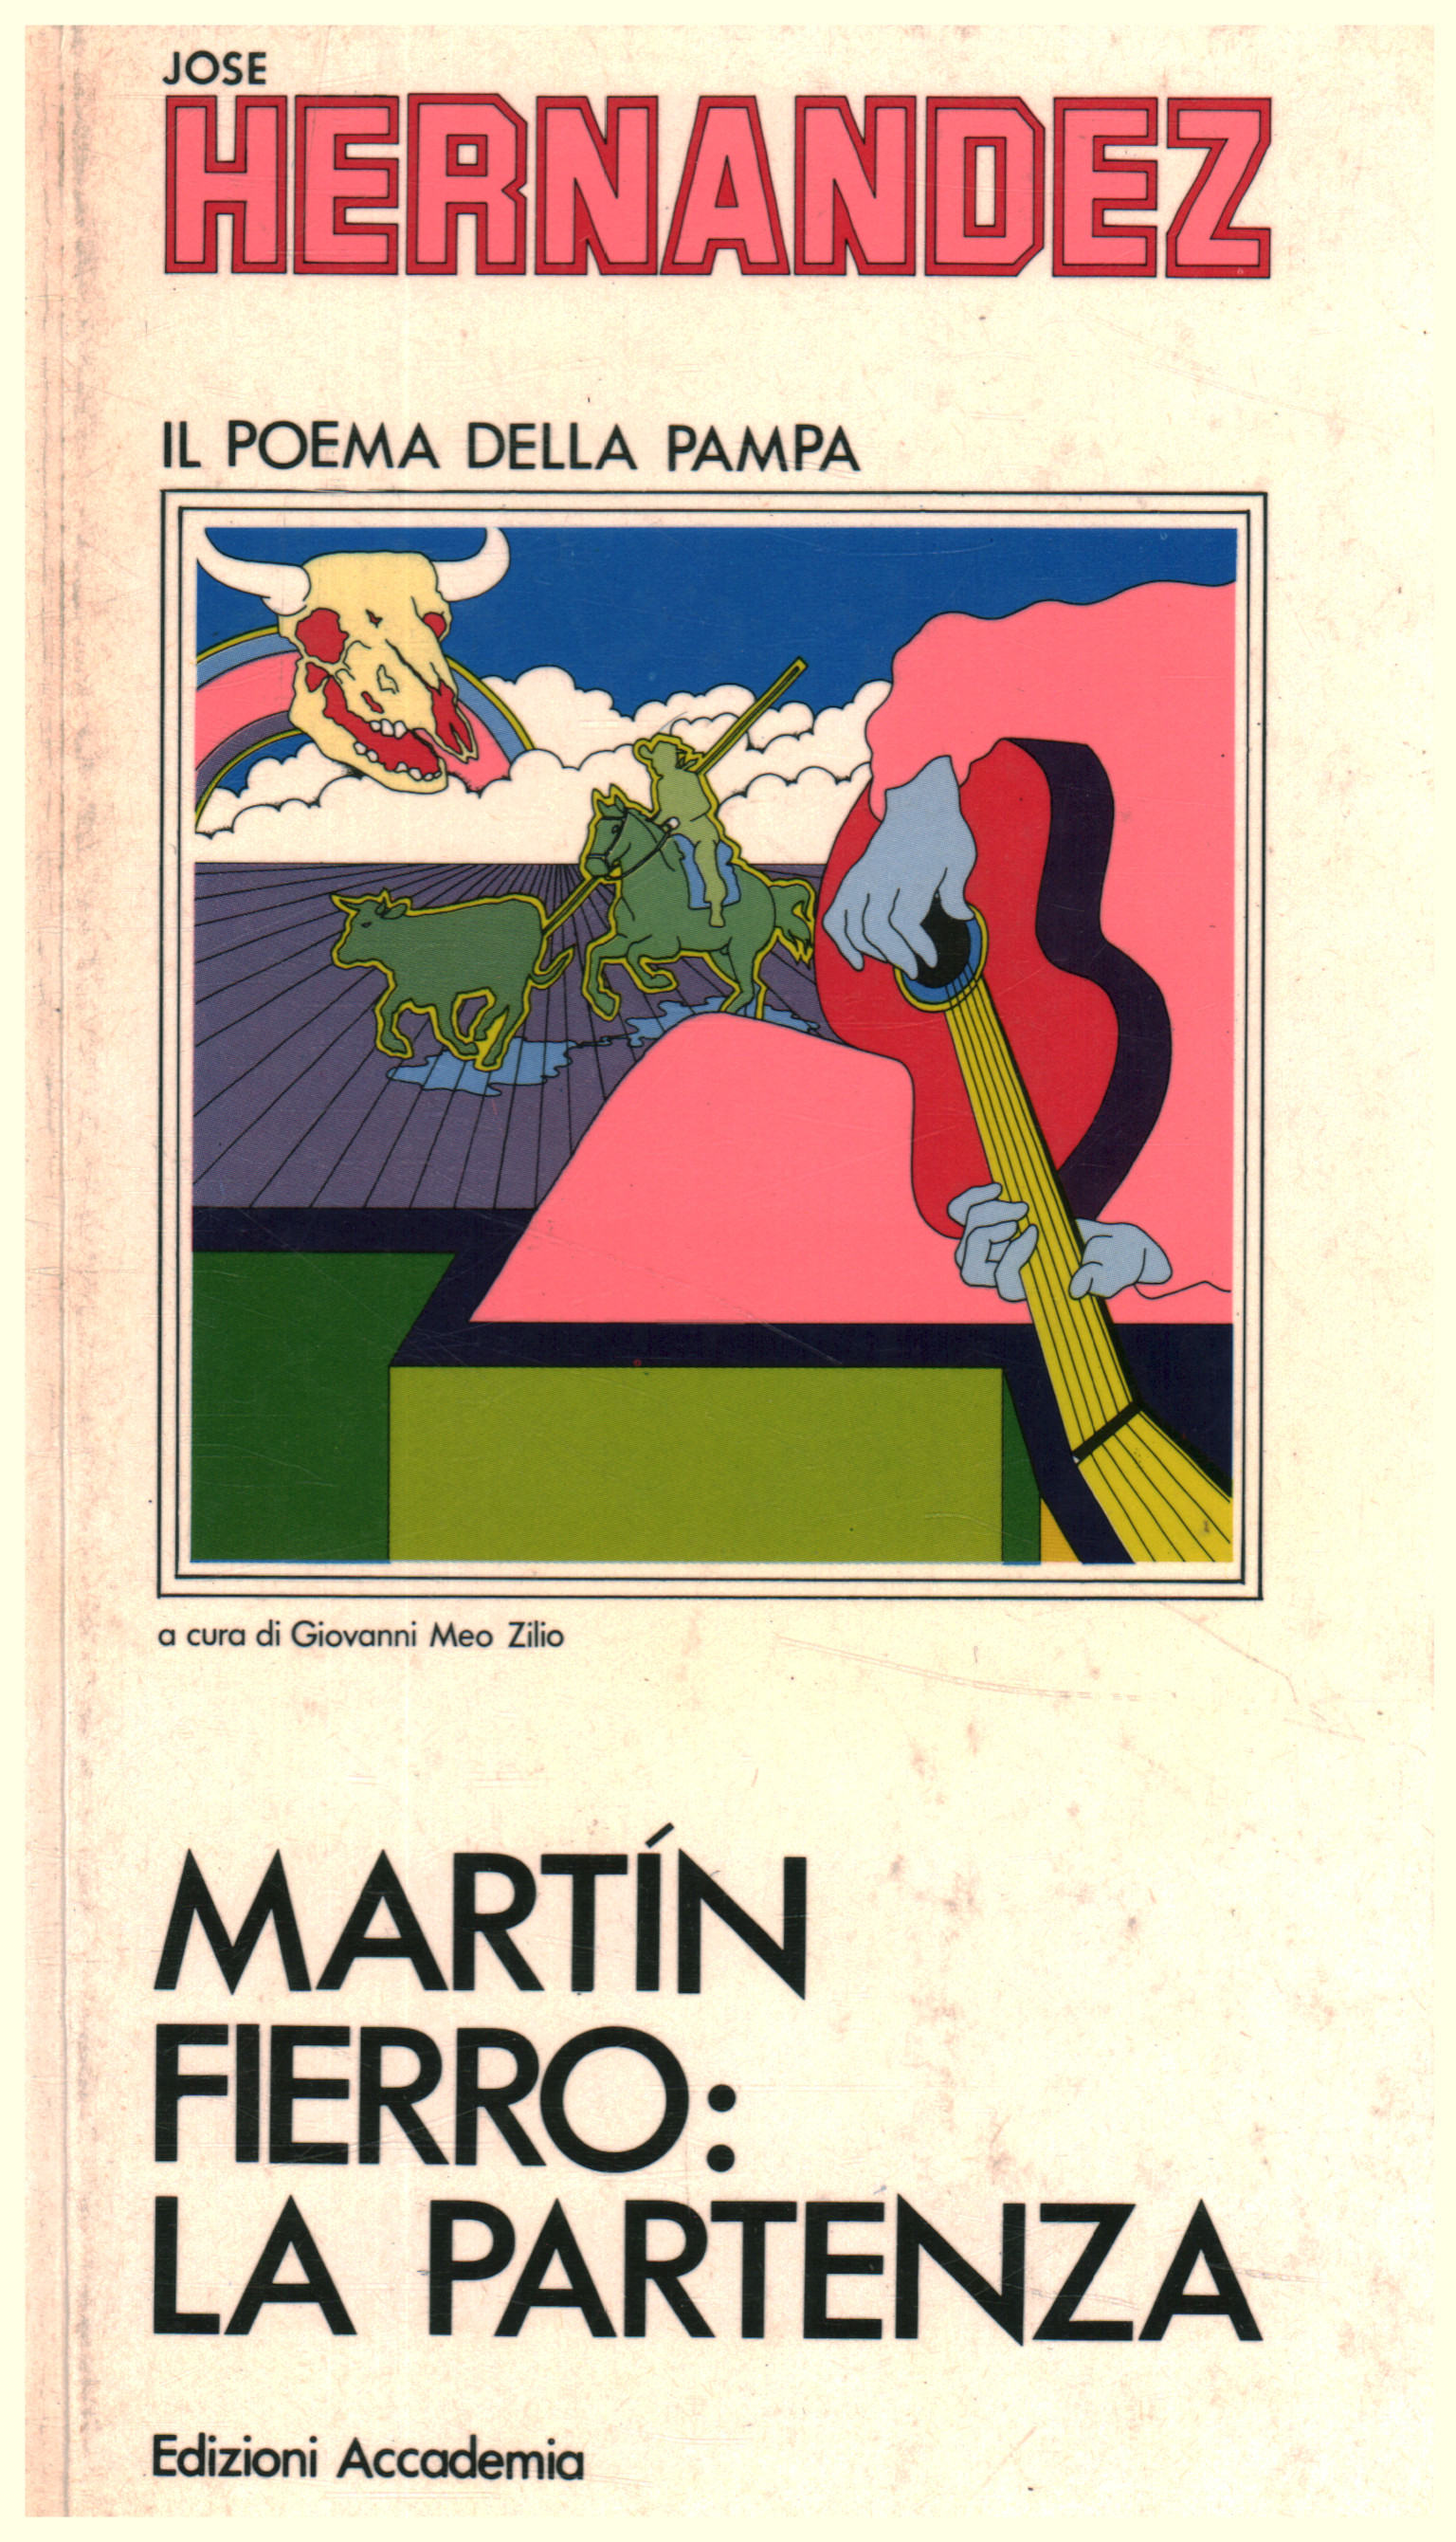 Martin Fierro: the departure